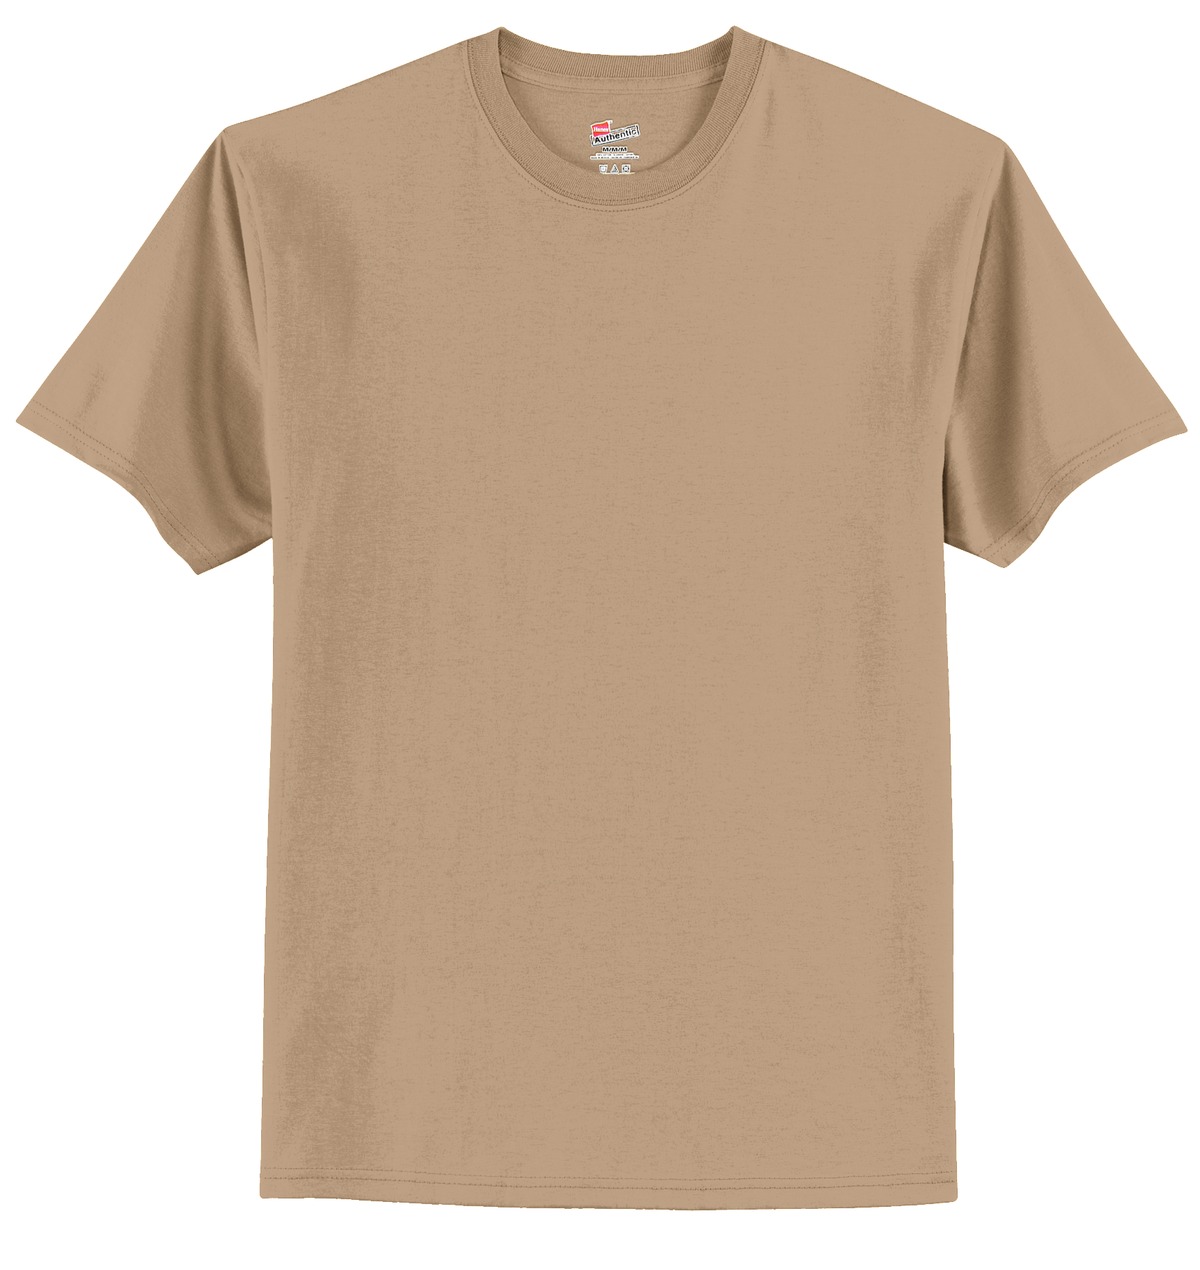 Hanes ComfortSoft 100% Cotton T-shirt